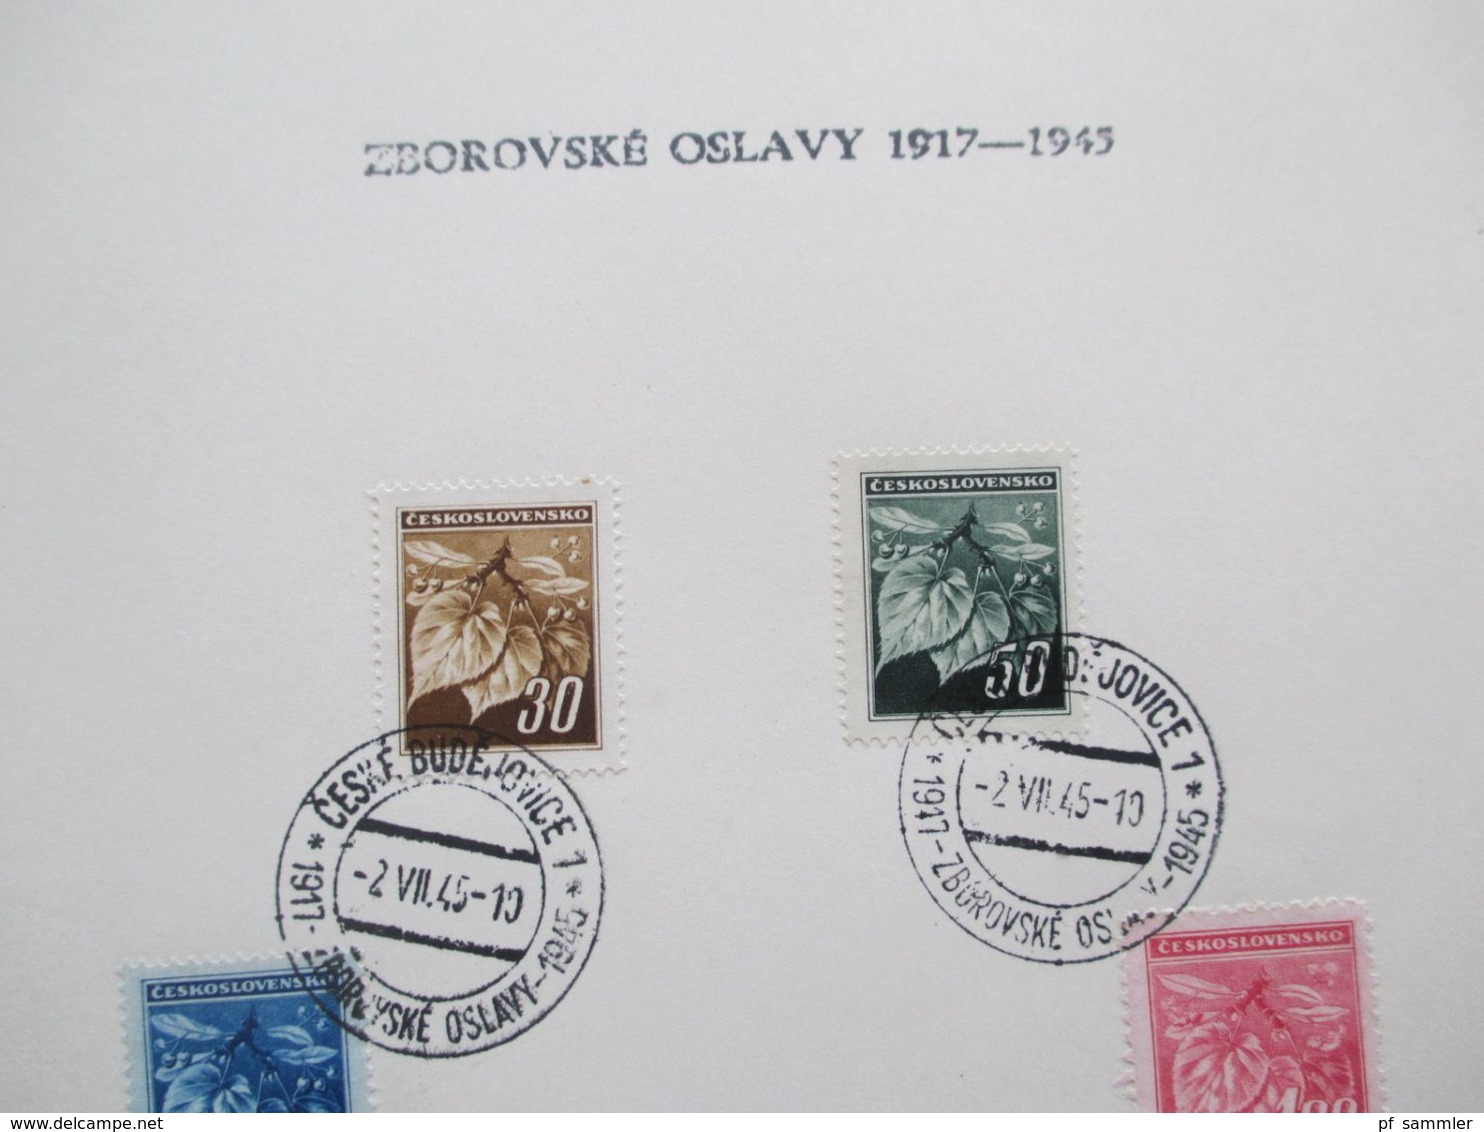 CSSR 2.7.1945 Sonderblätter Zborovske Oslavy 1917 - 1945 Stempel Ceske Budejovice 5 Blätter - Briefe U. Dokumente